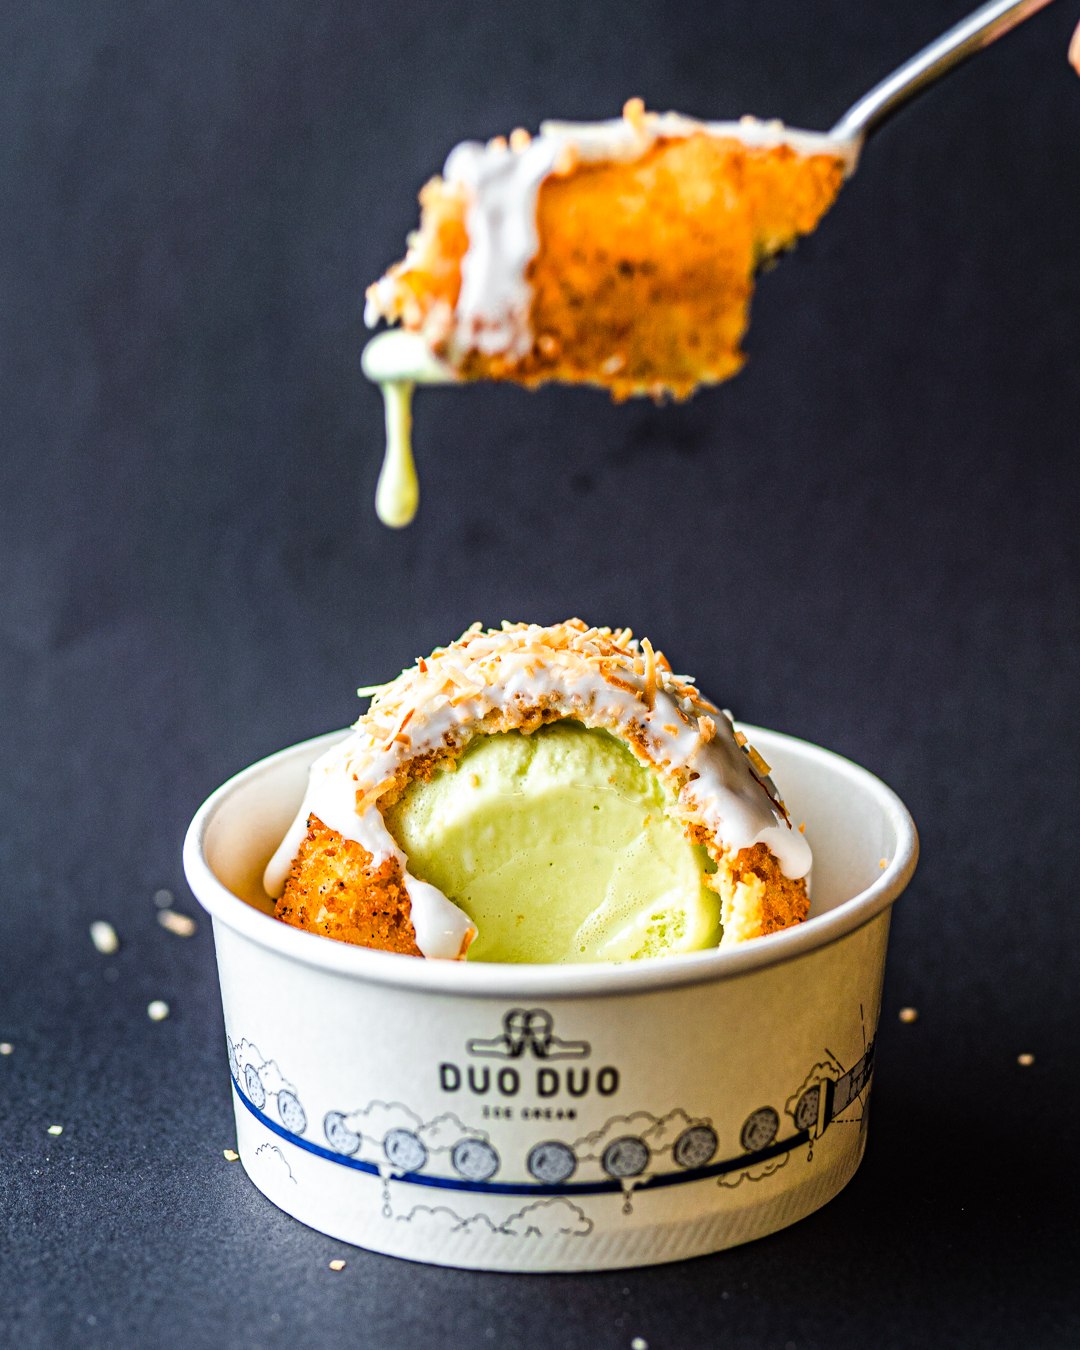 Duo Duo deep fried pistachio icecream